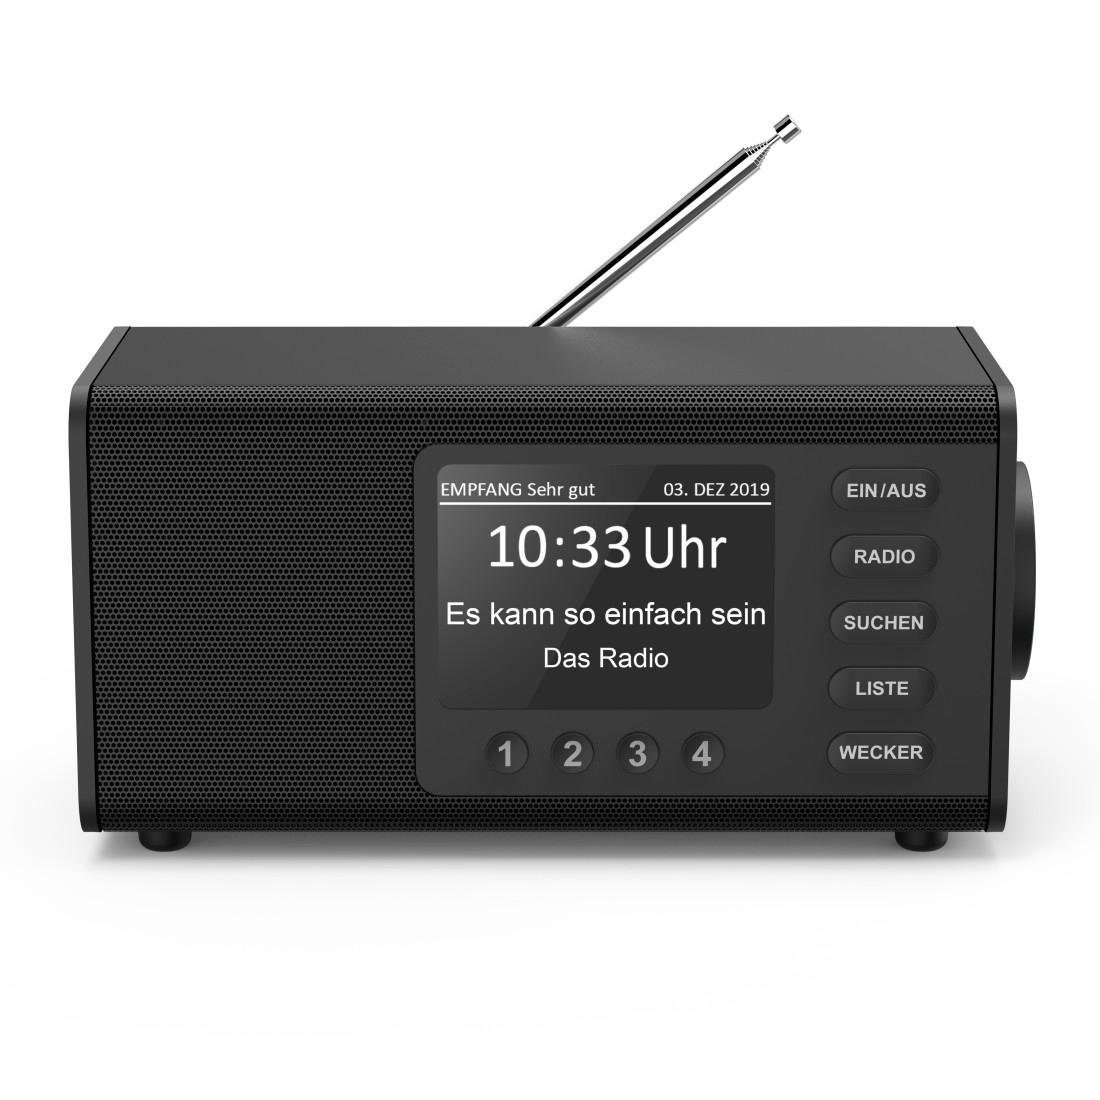 Hama Digitale radio (dab+) Digitalradio "DR1000DE", FM/DAB/DAB+, Schwarz Internetradio